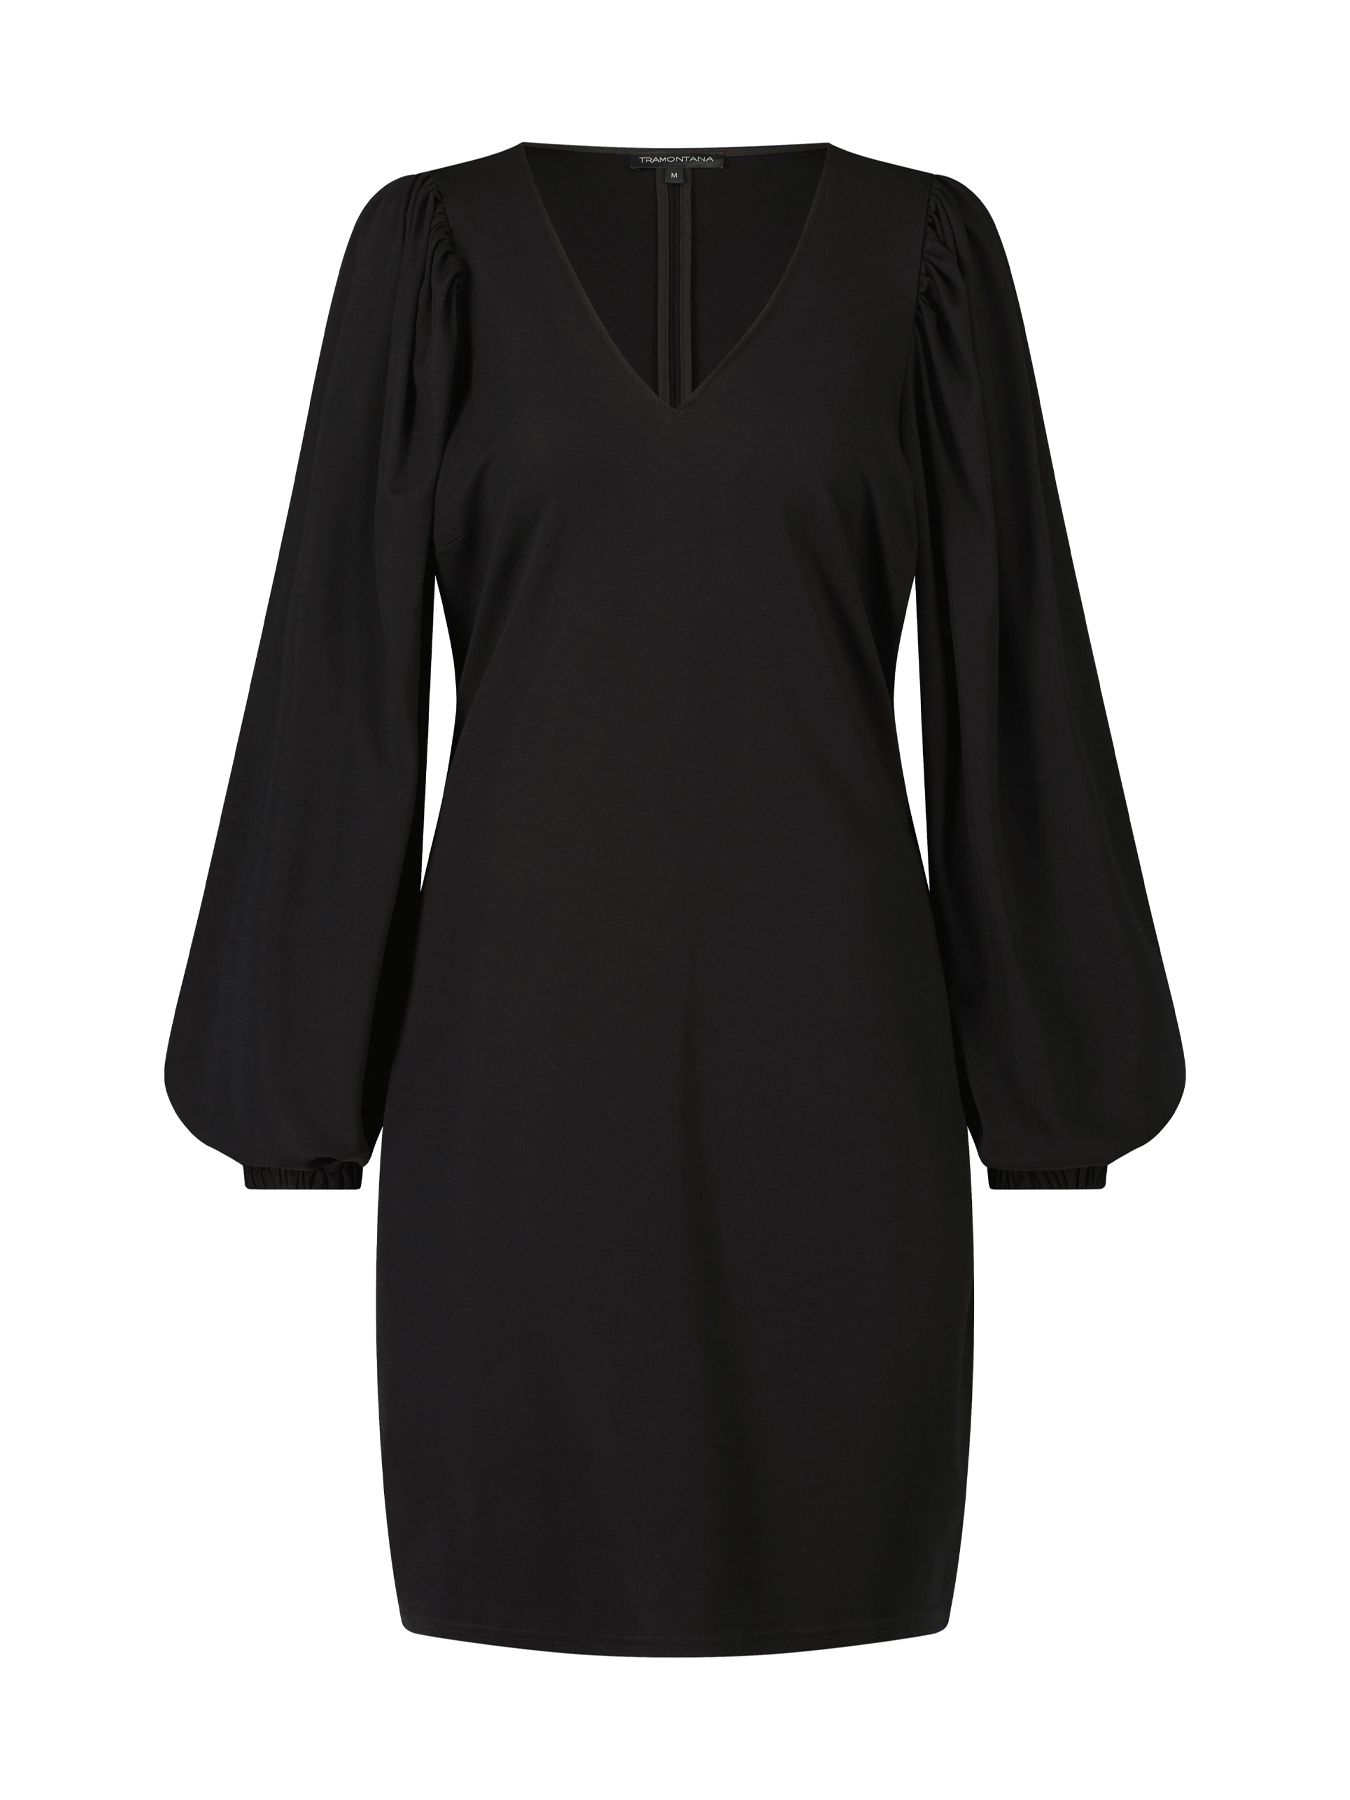 Tramontana Dress Jersey Puff Sleeve Black 009000 00102785-EKA26012900000001